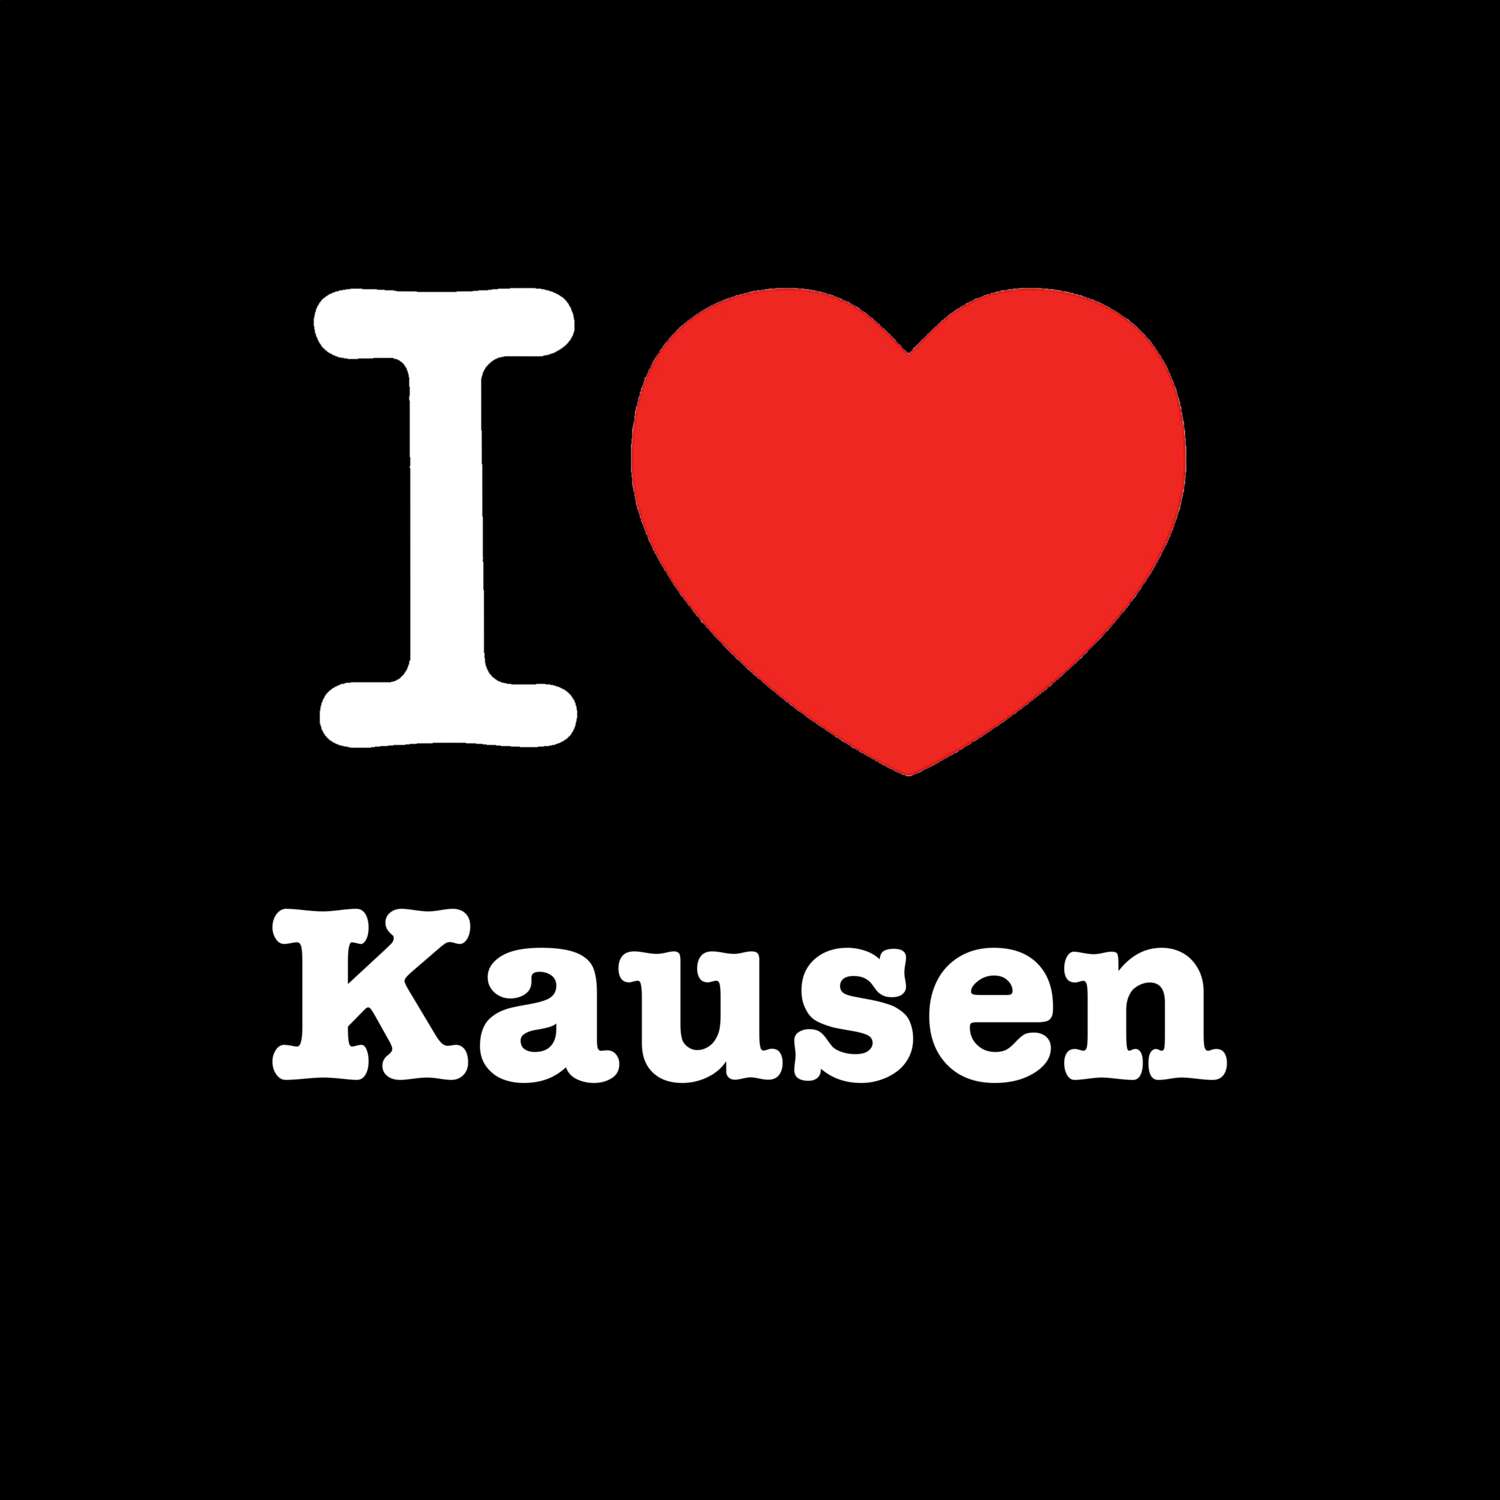 Kausen T-Shirt »I love«